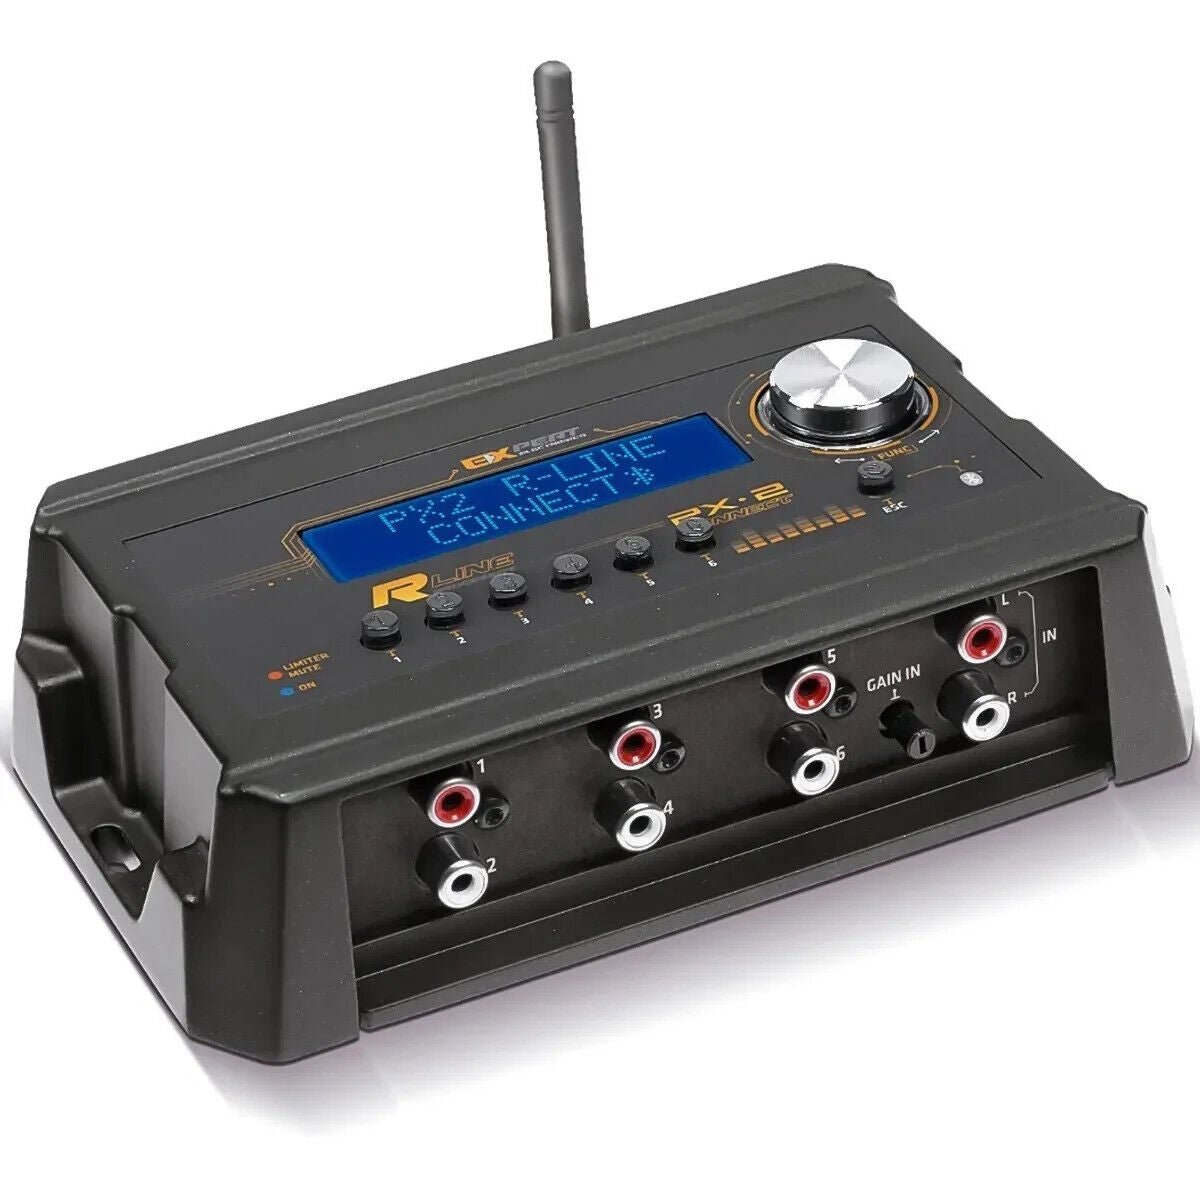 Expert Electronics PX 2 Connect Bluetooth 6 CH Equalizer Digital Audio Processor